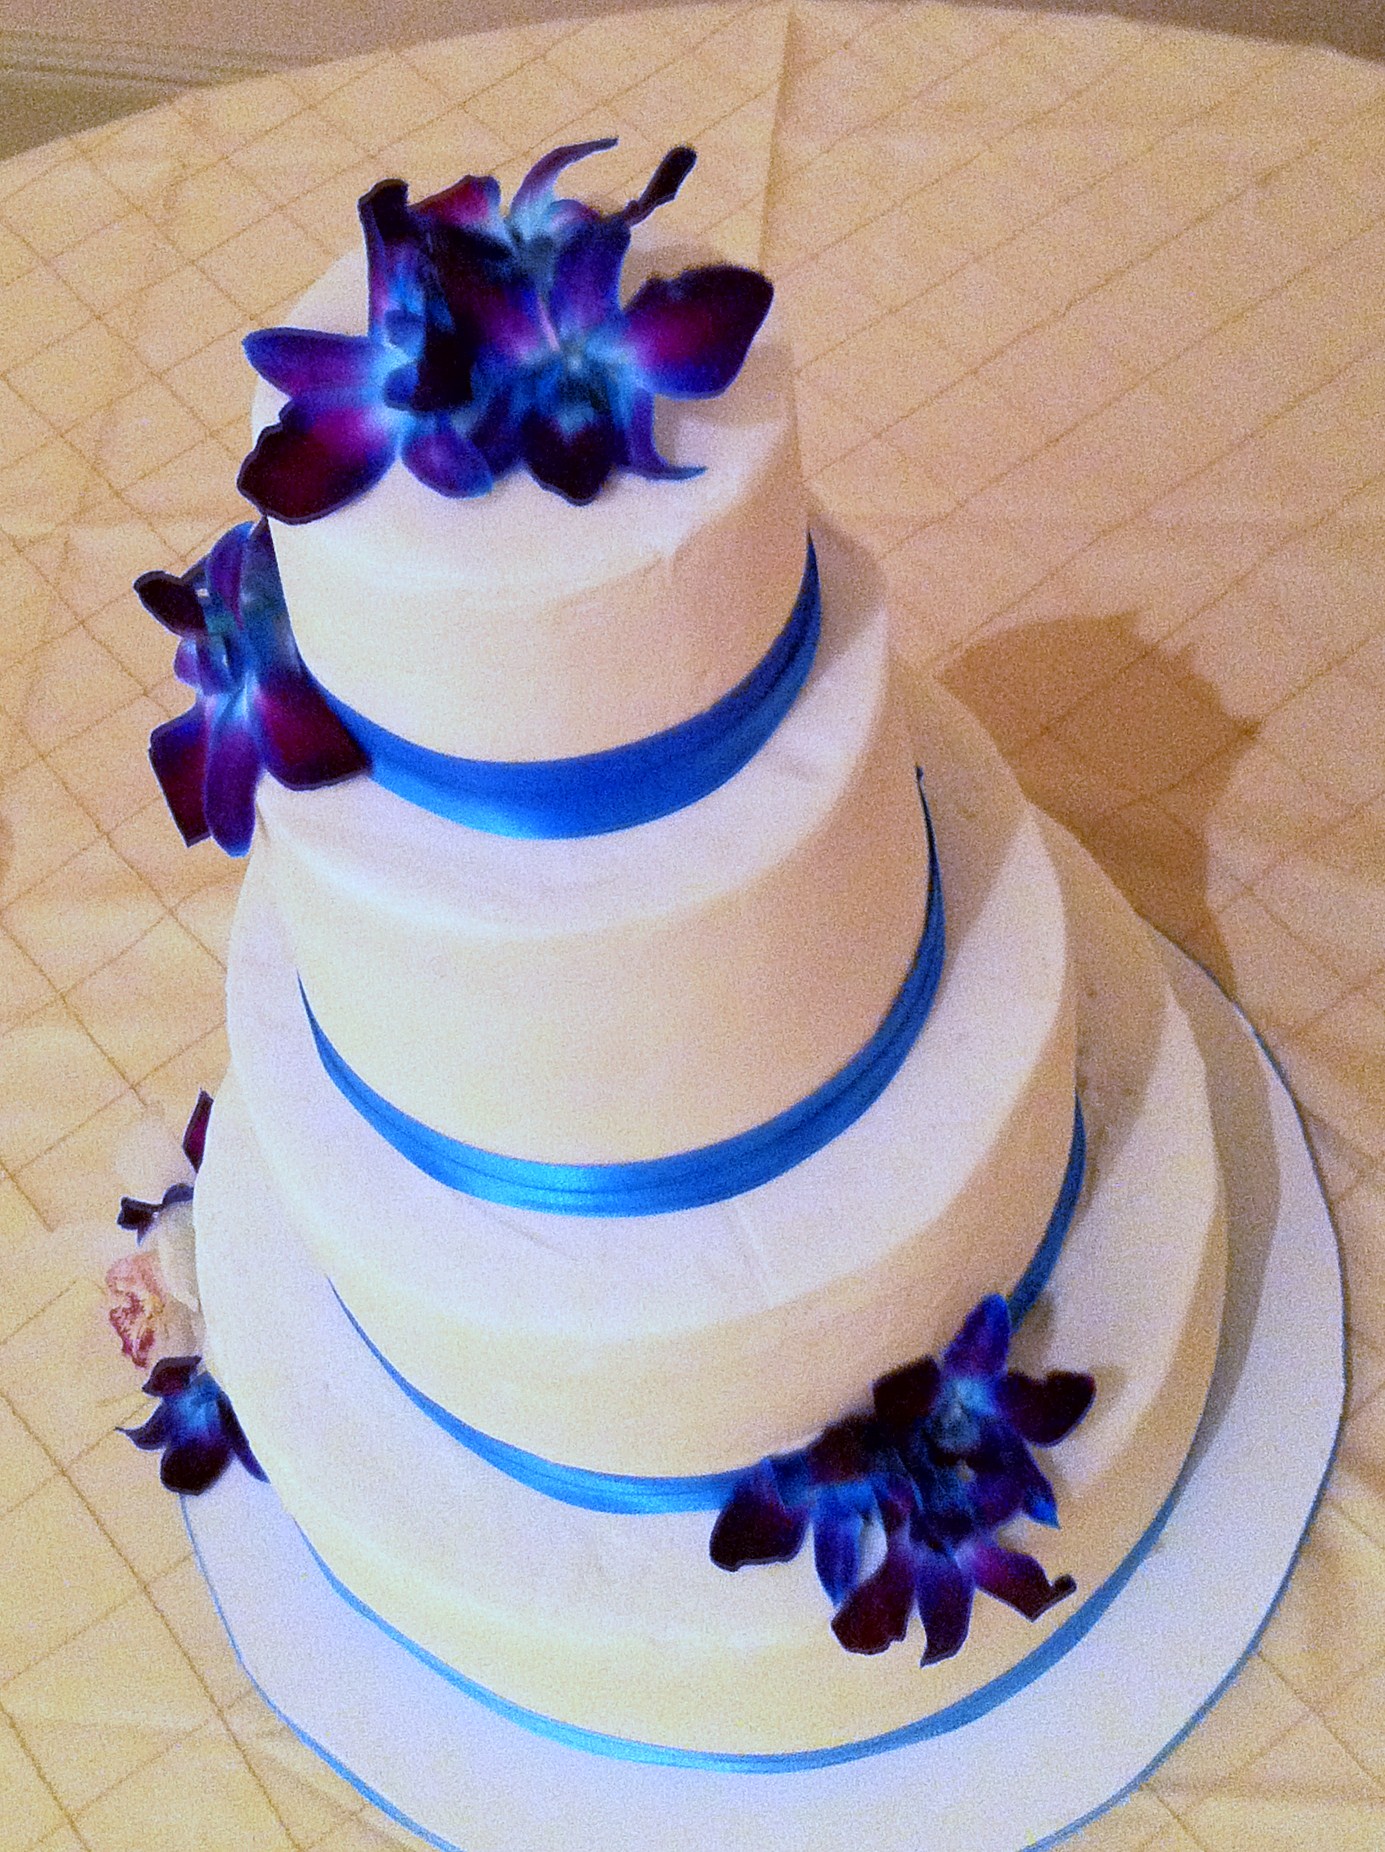 royal blue and white wedding cakes